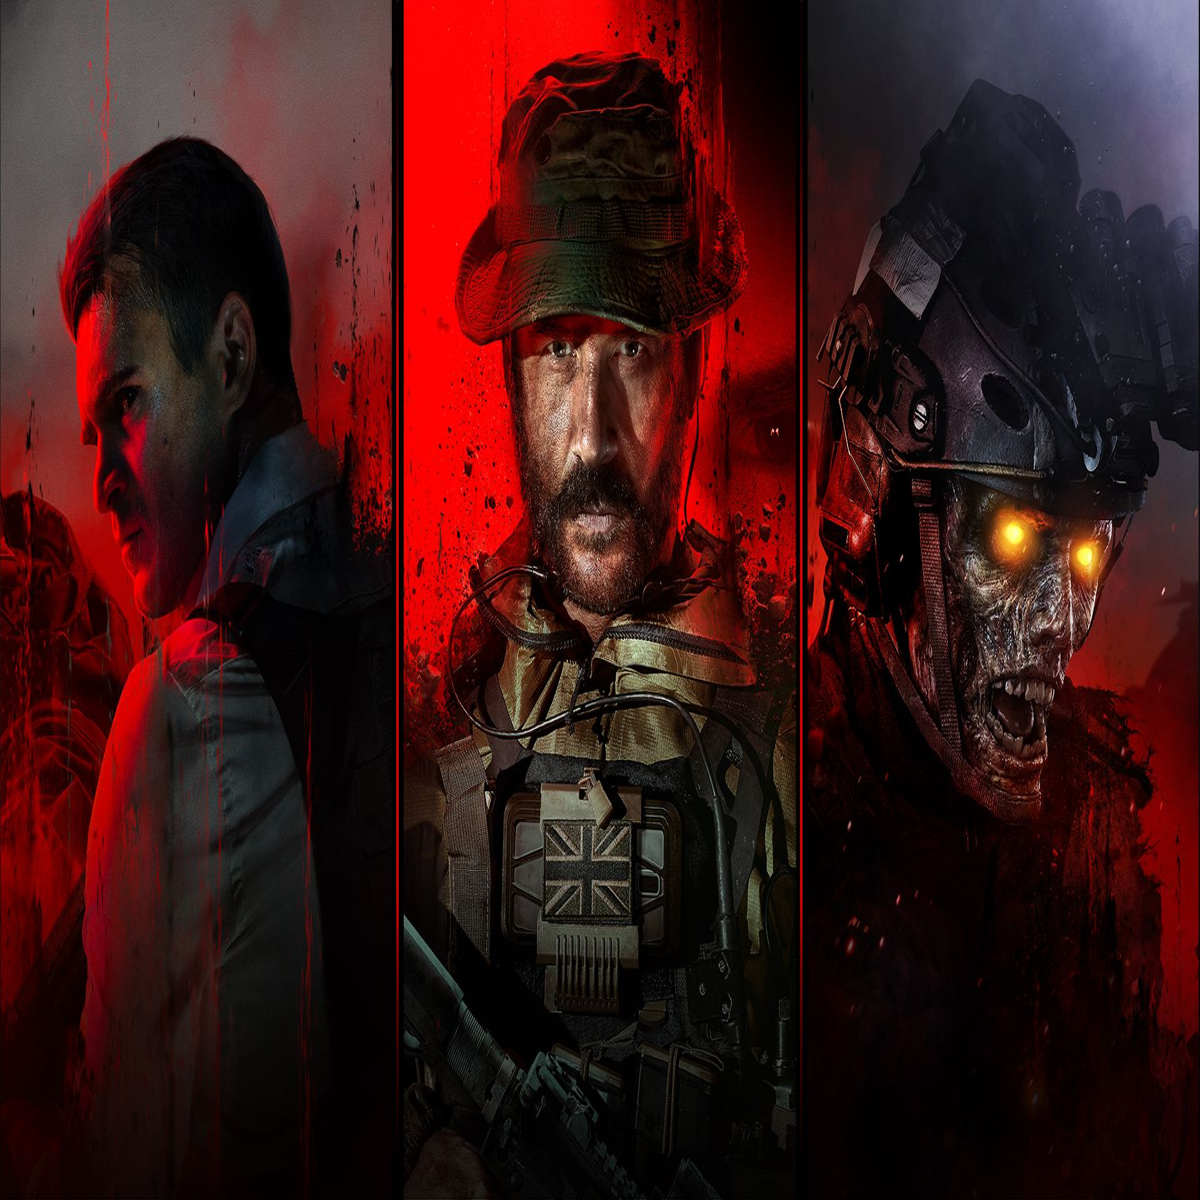 Call of Duty®: Modern Warfare® II is Officially Live Worldwide — Play Now!